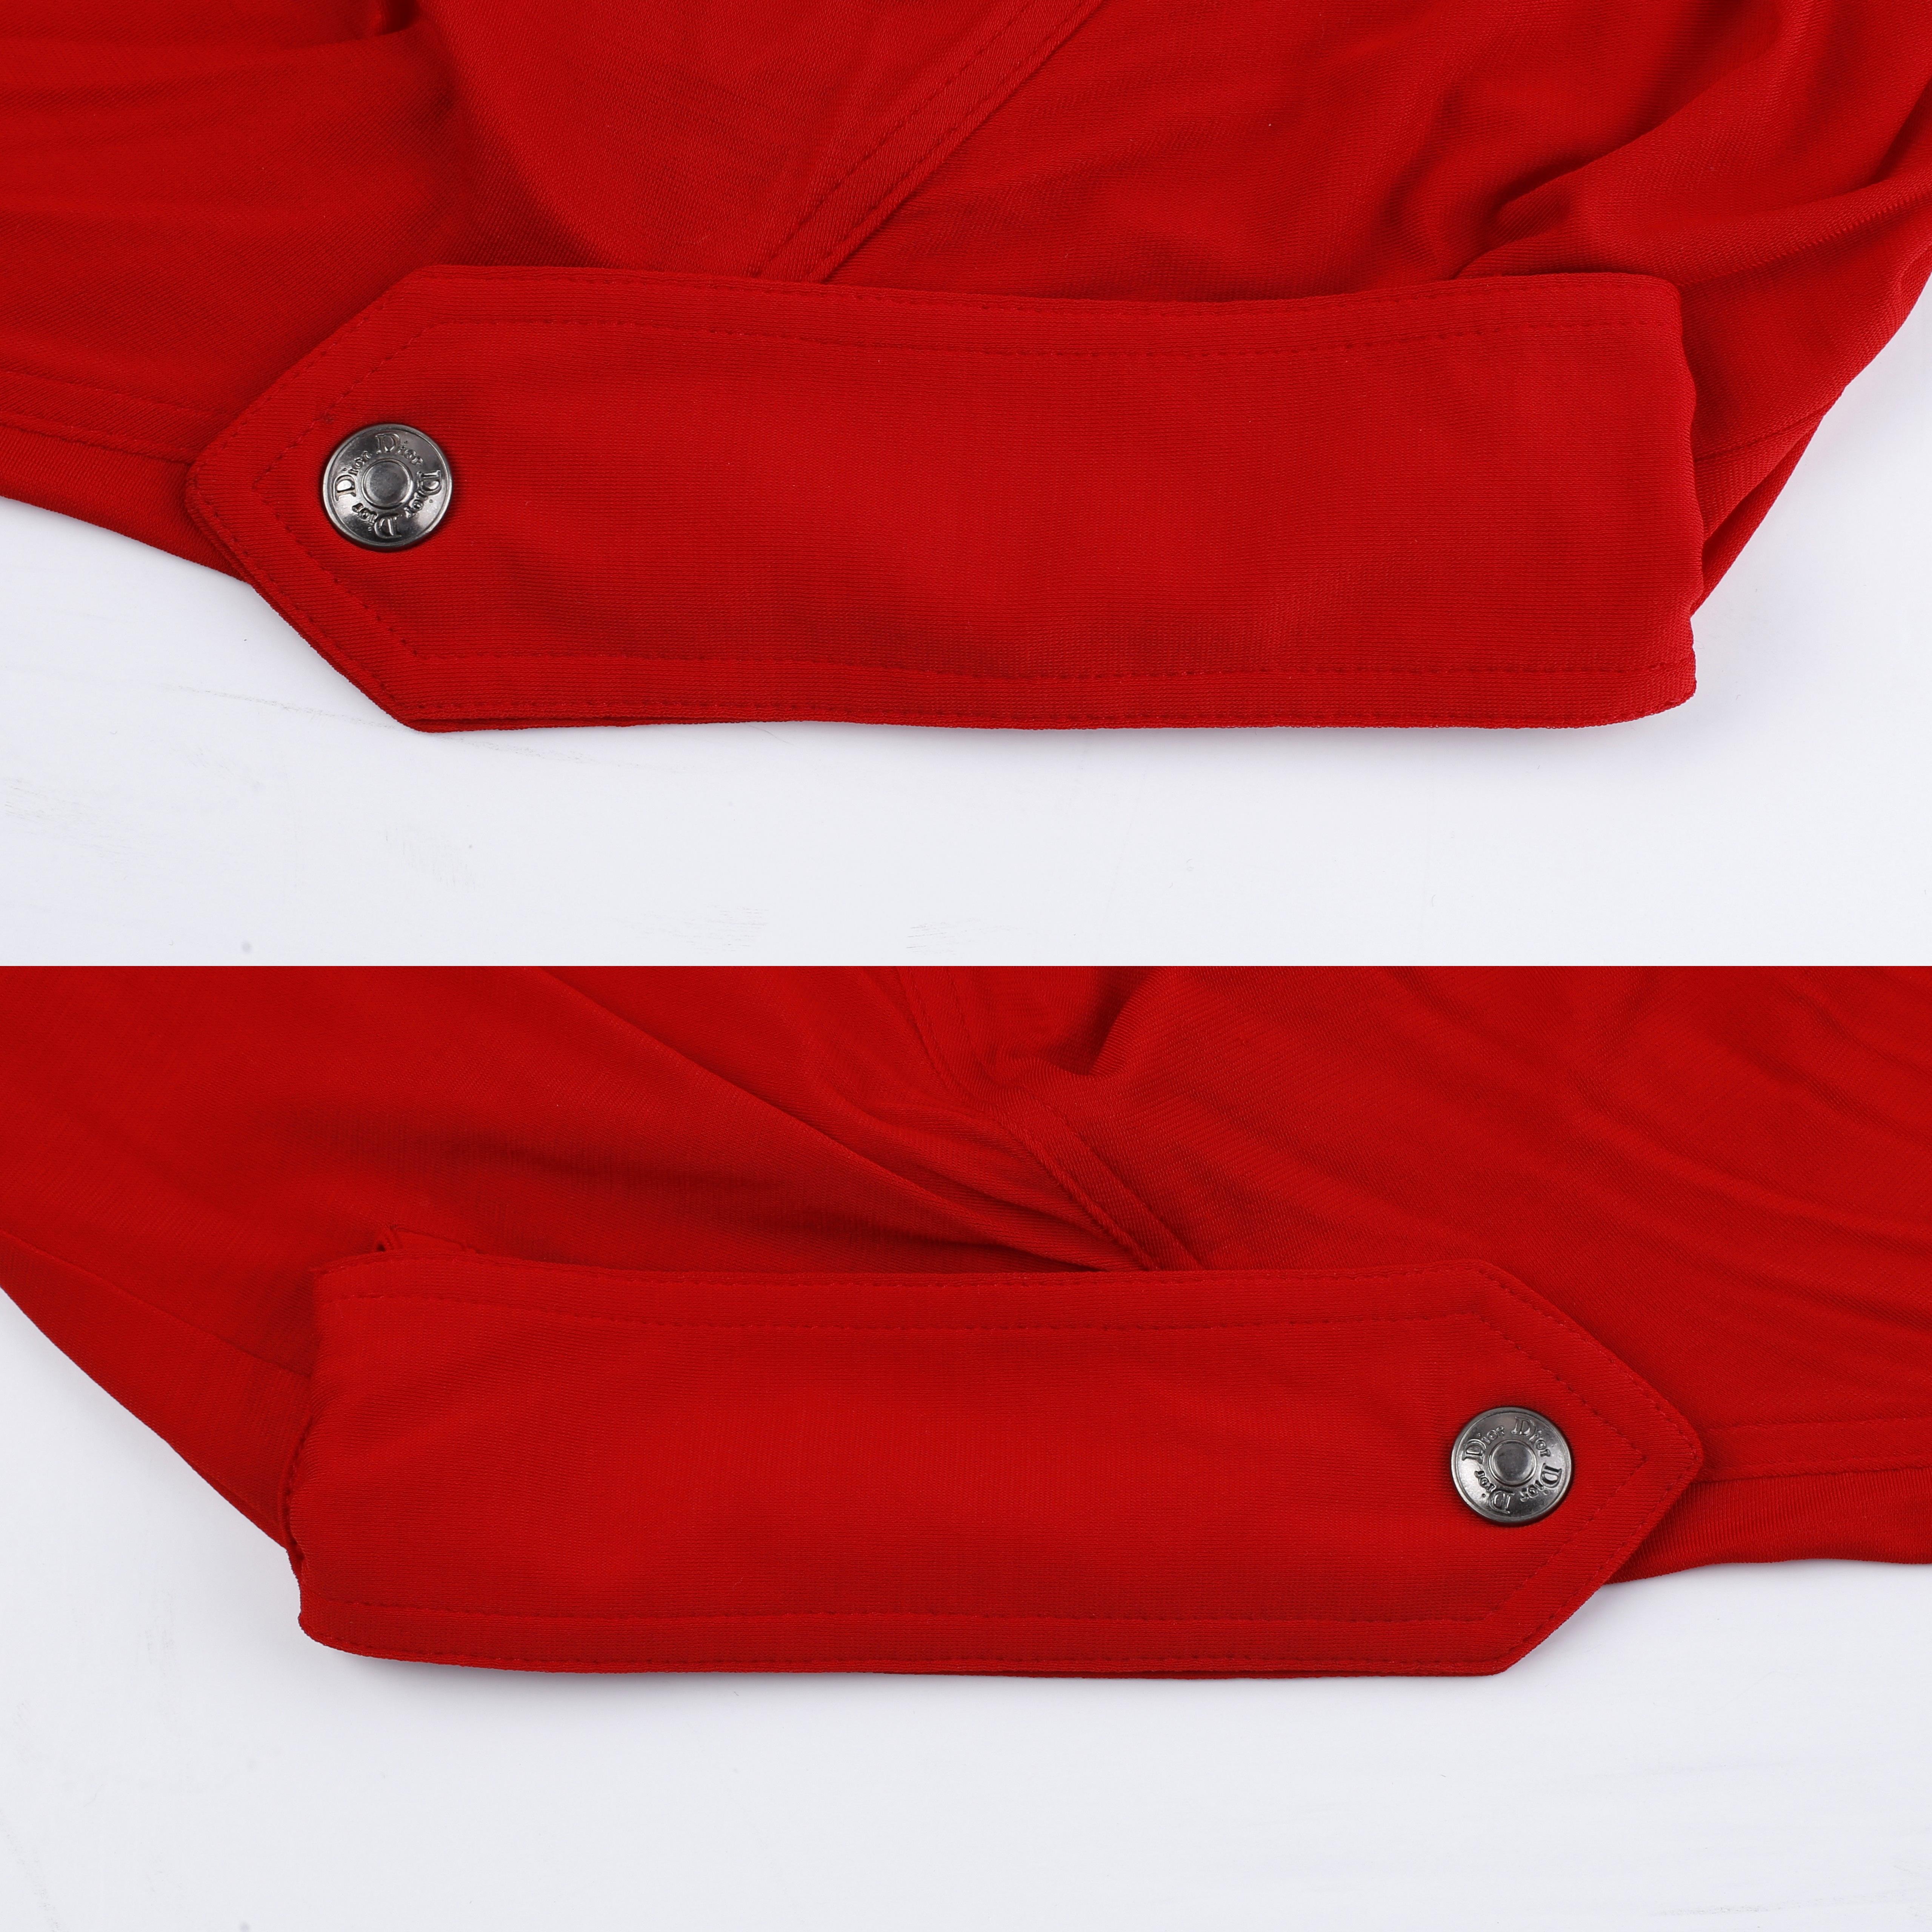 Christian Dior John Galliano S/S 2003 Red Plunge Draped Pocket Mini Dress For Sale 7